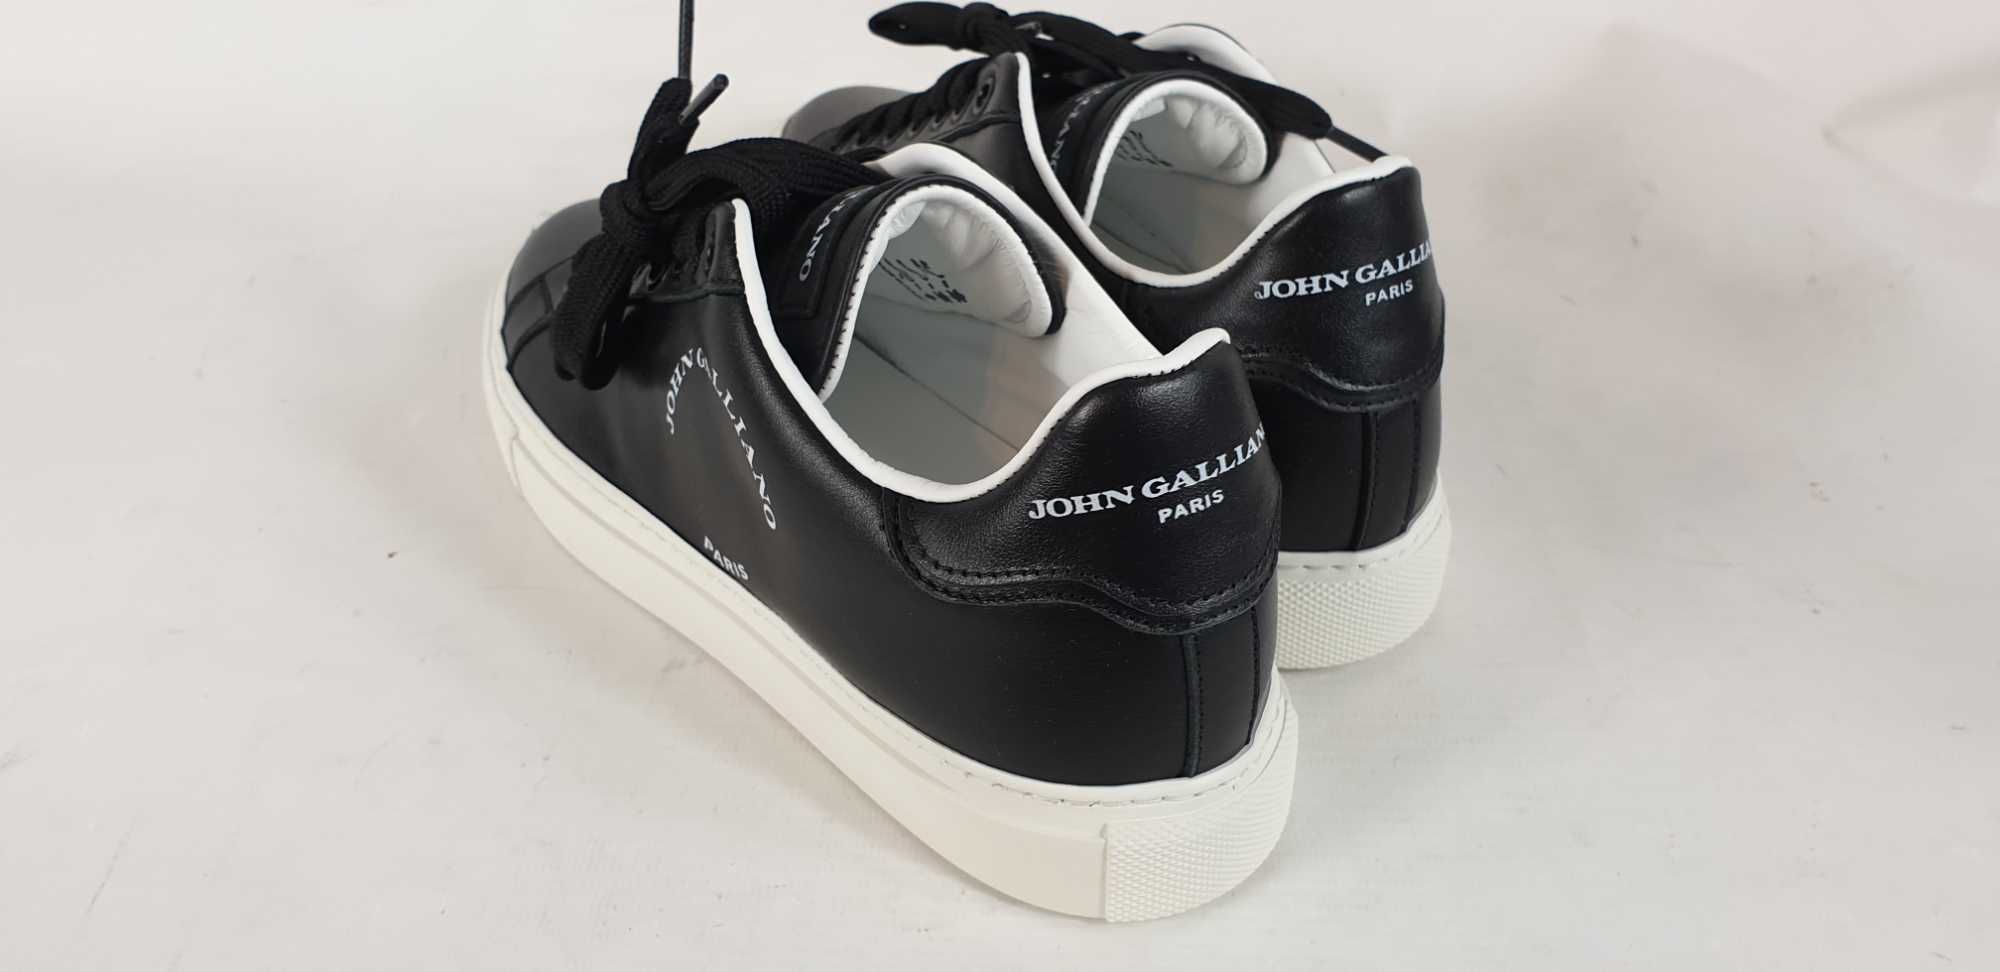 Sneakersy John Galliano Paris 6735 B Czarny Roz.36